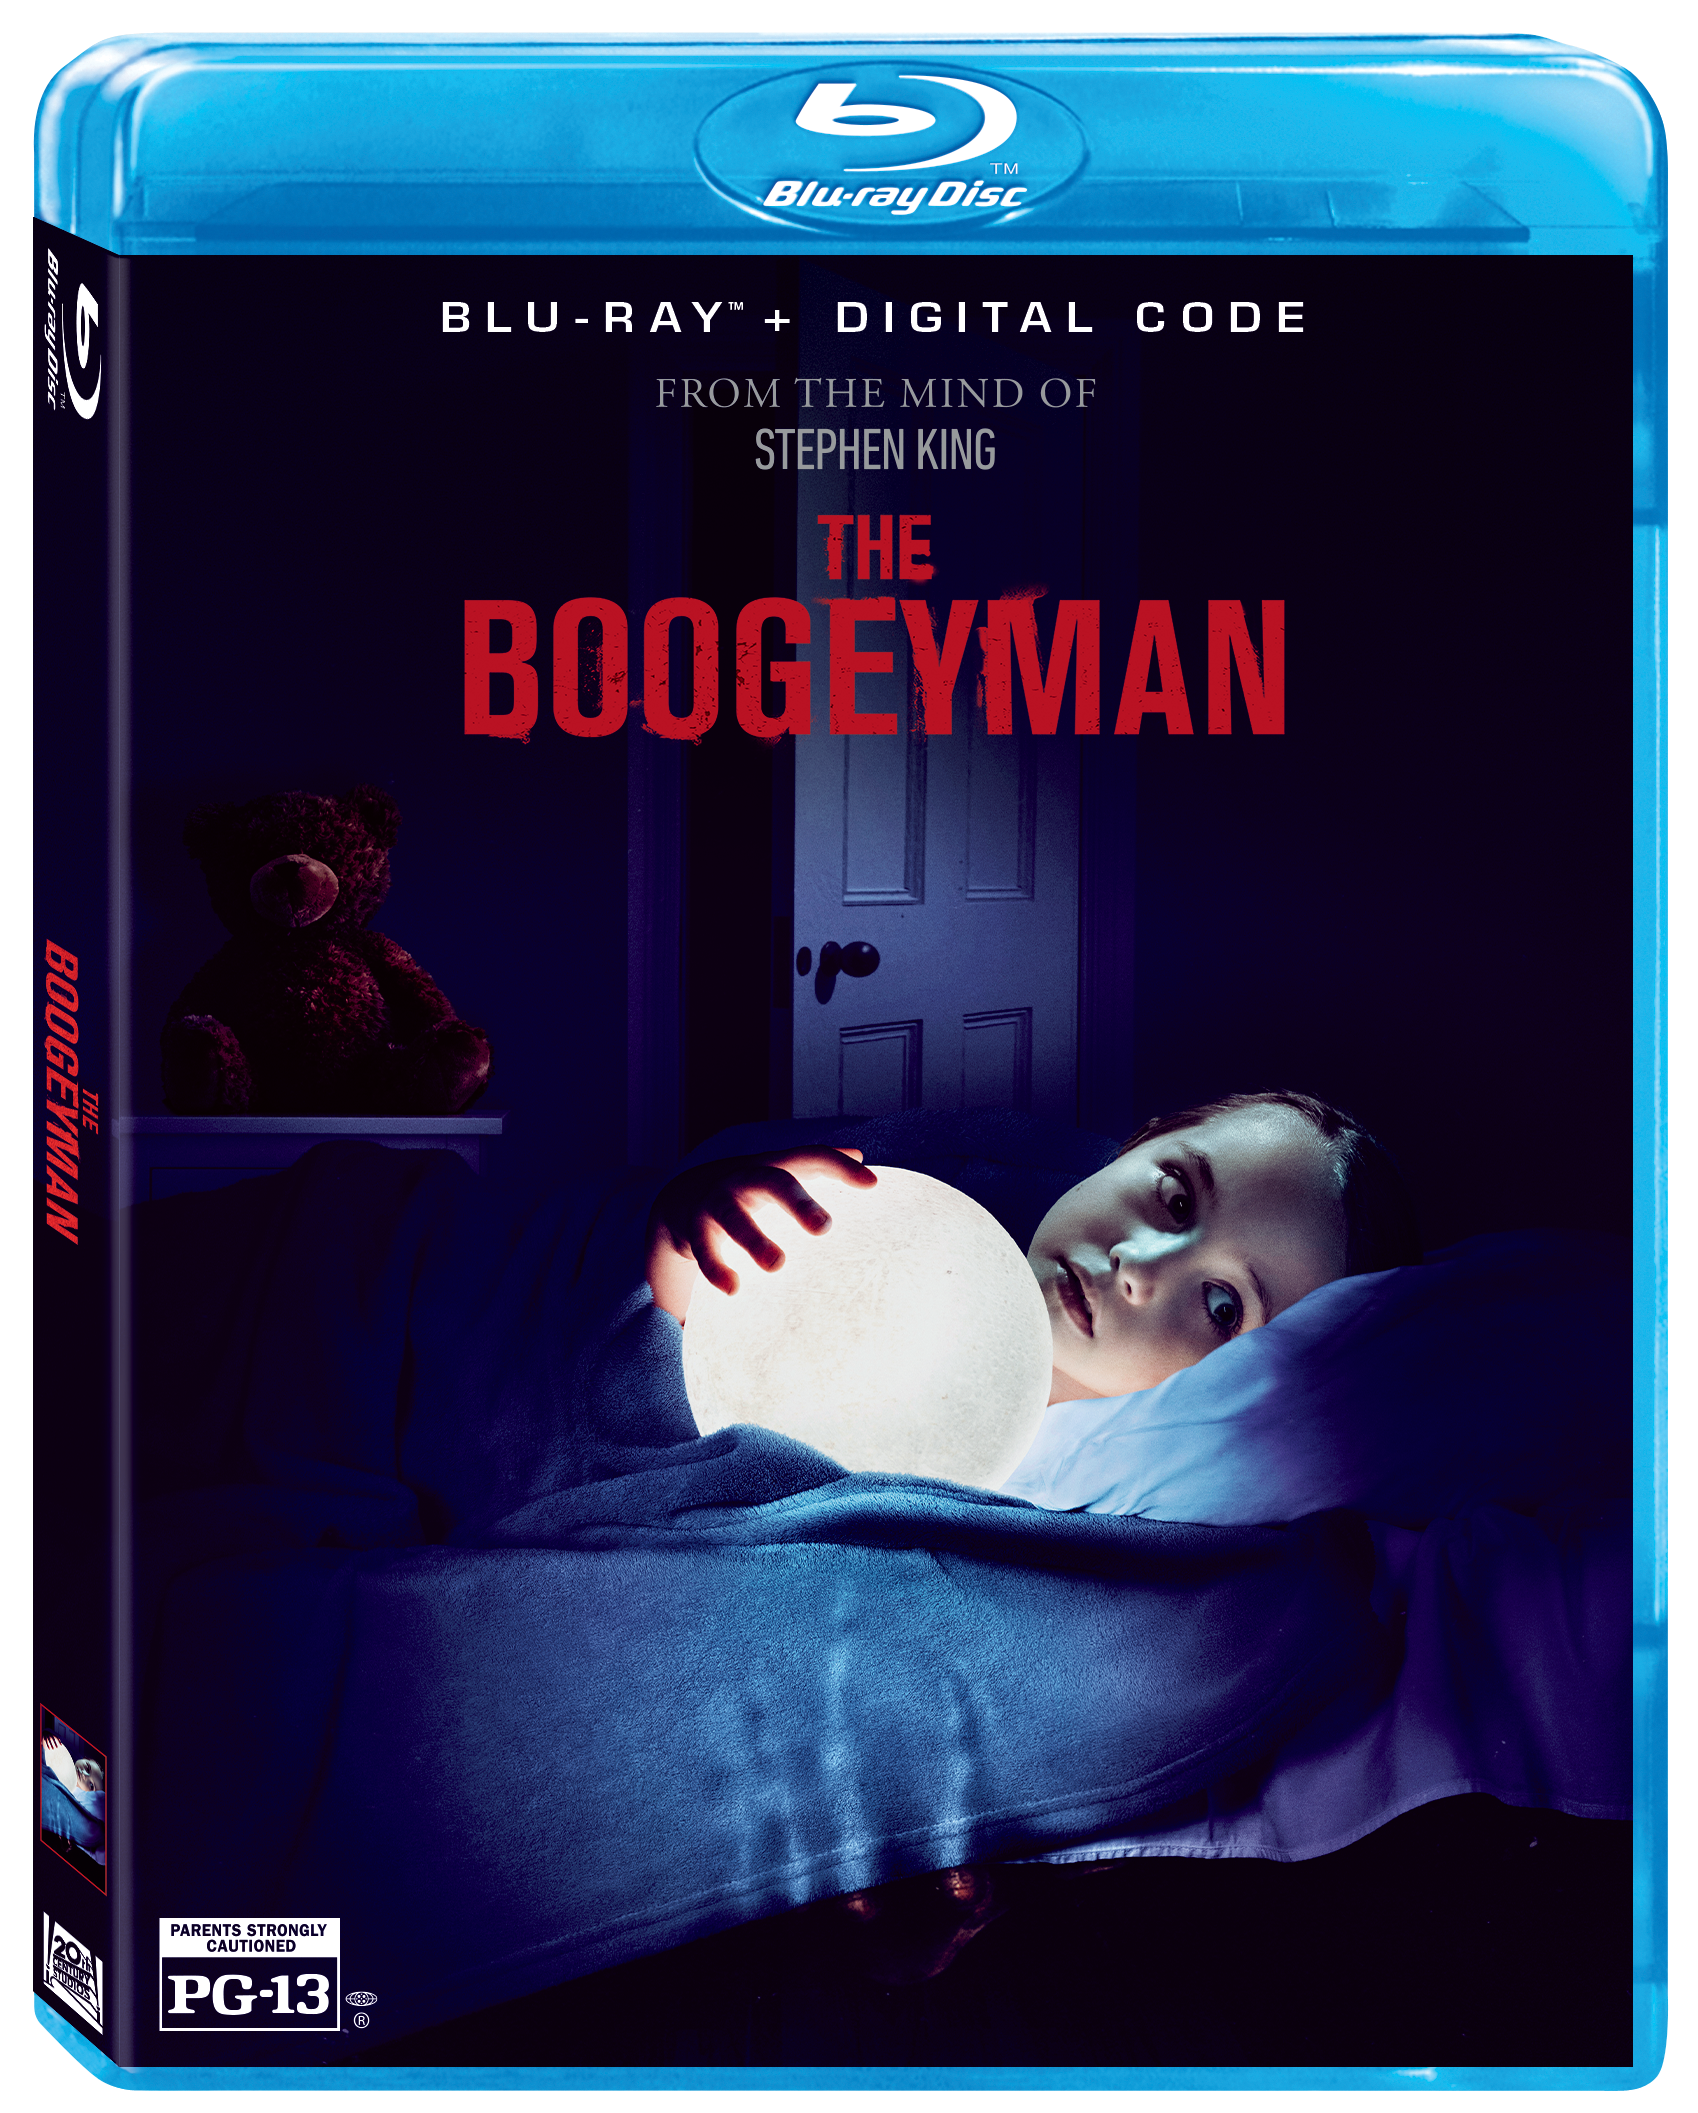 the boogeyman arrives on digital 8/29 and blu-ray 10/10